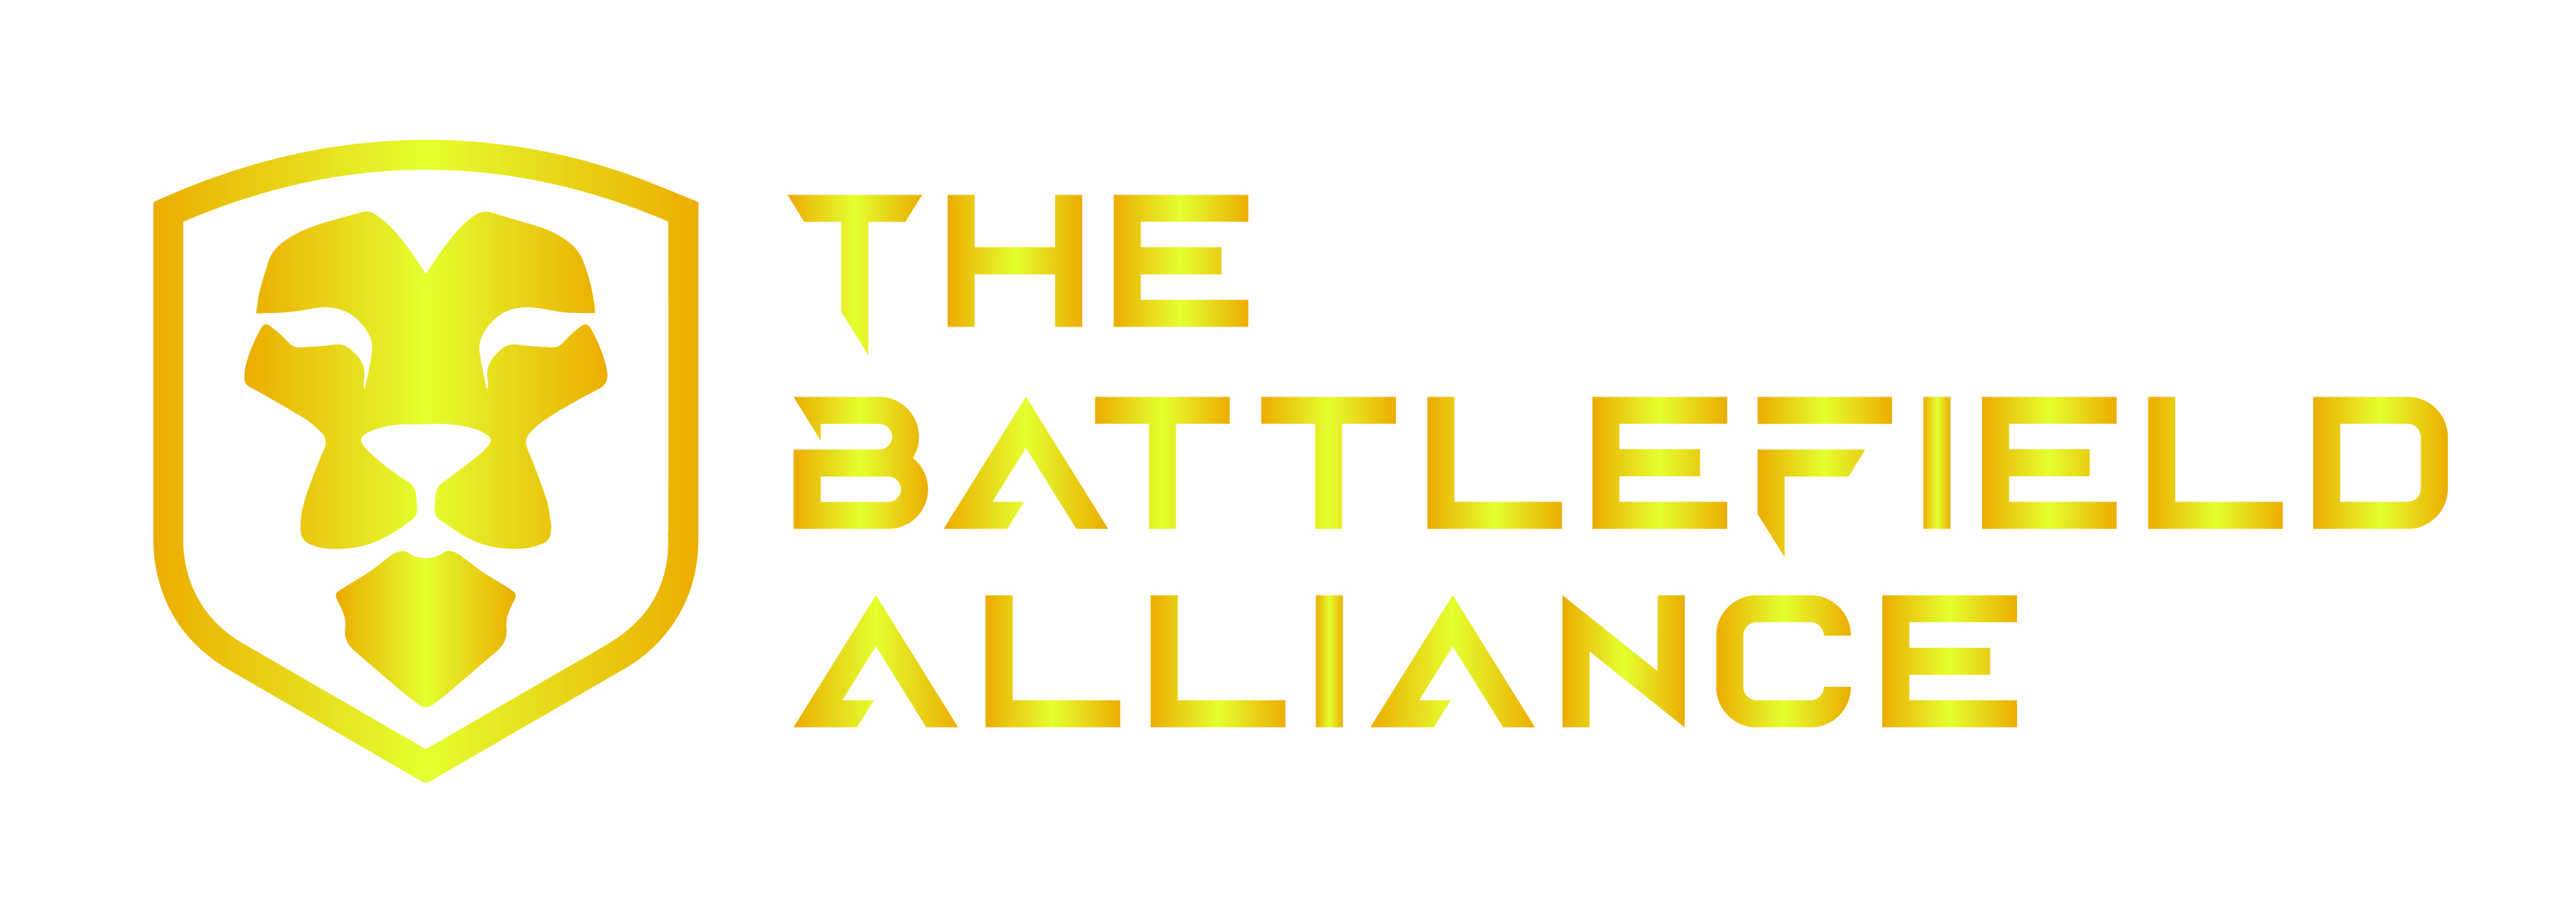 The Battlefield Aliance